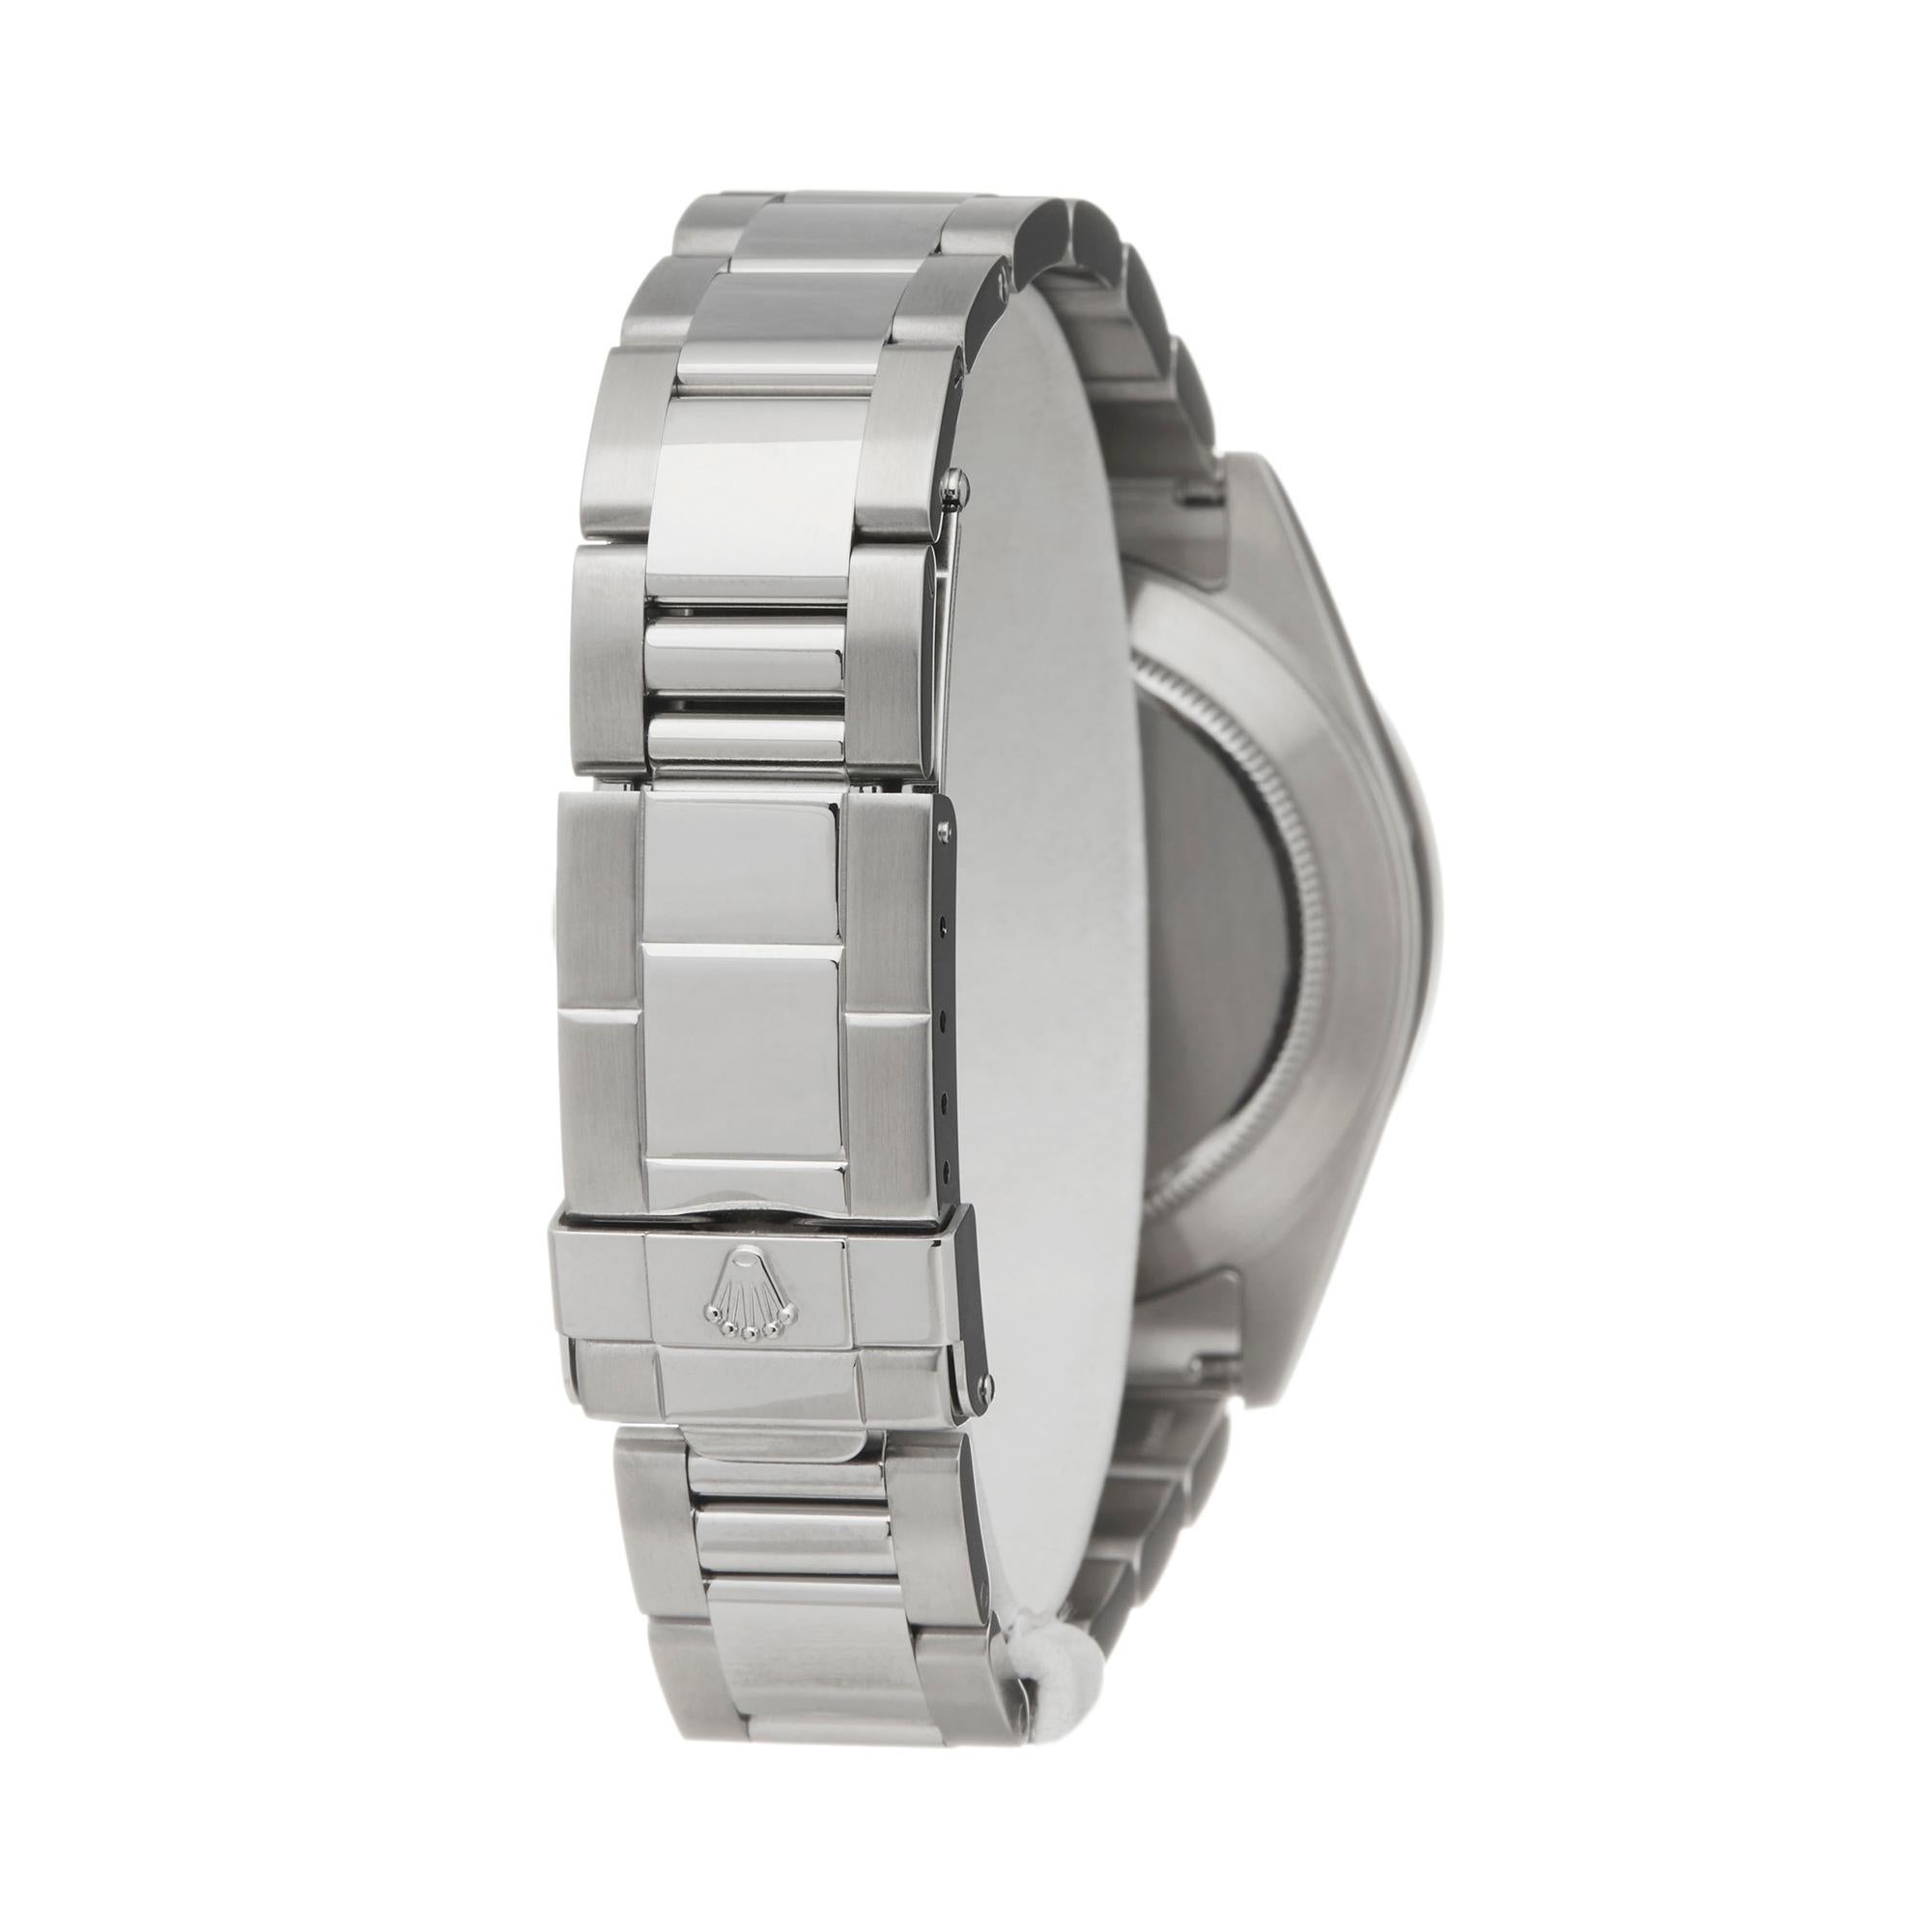 Rolex Daytona Zenith Stainless Steel 16520 Wristwatch 1